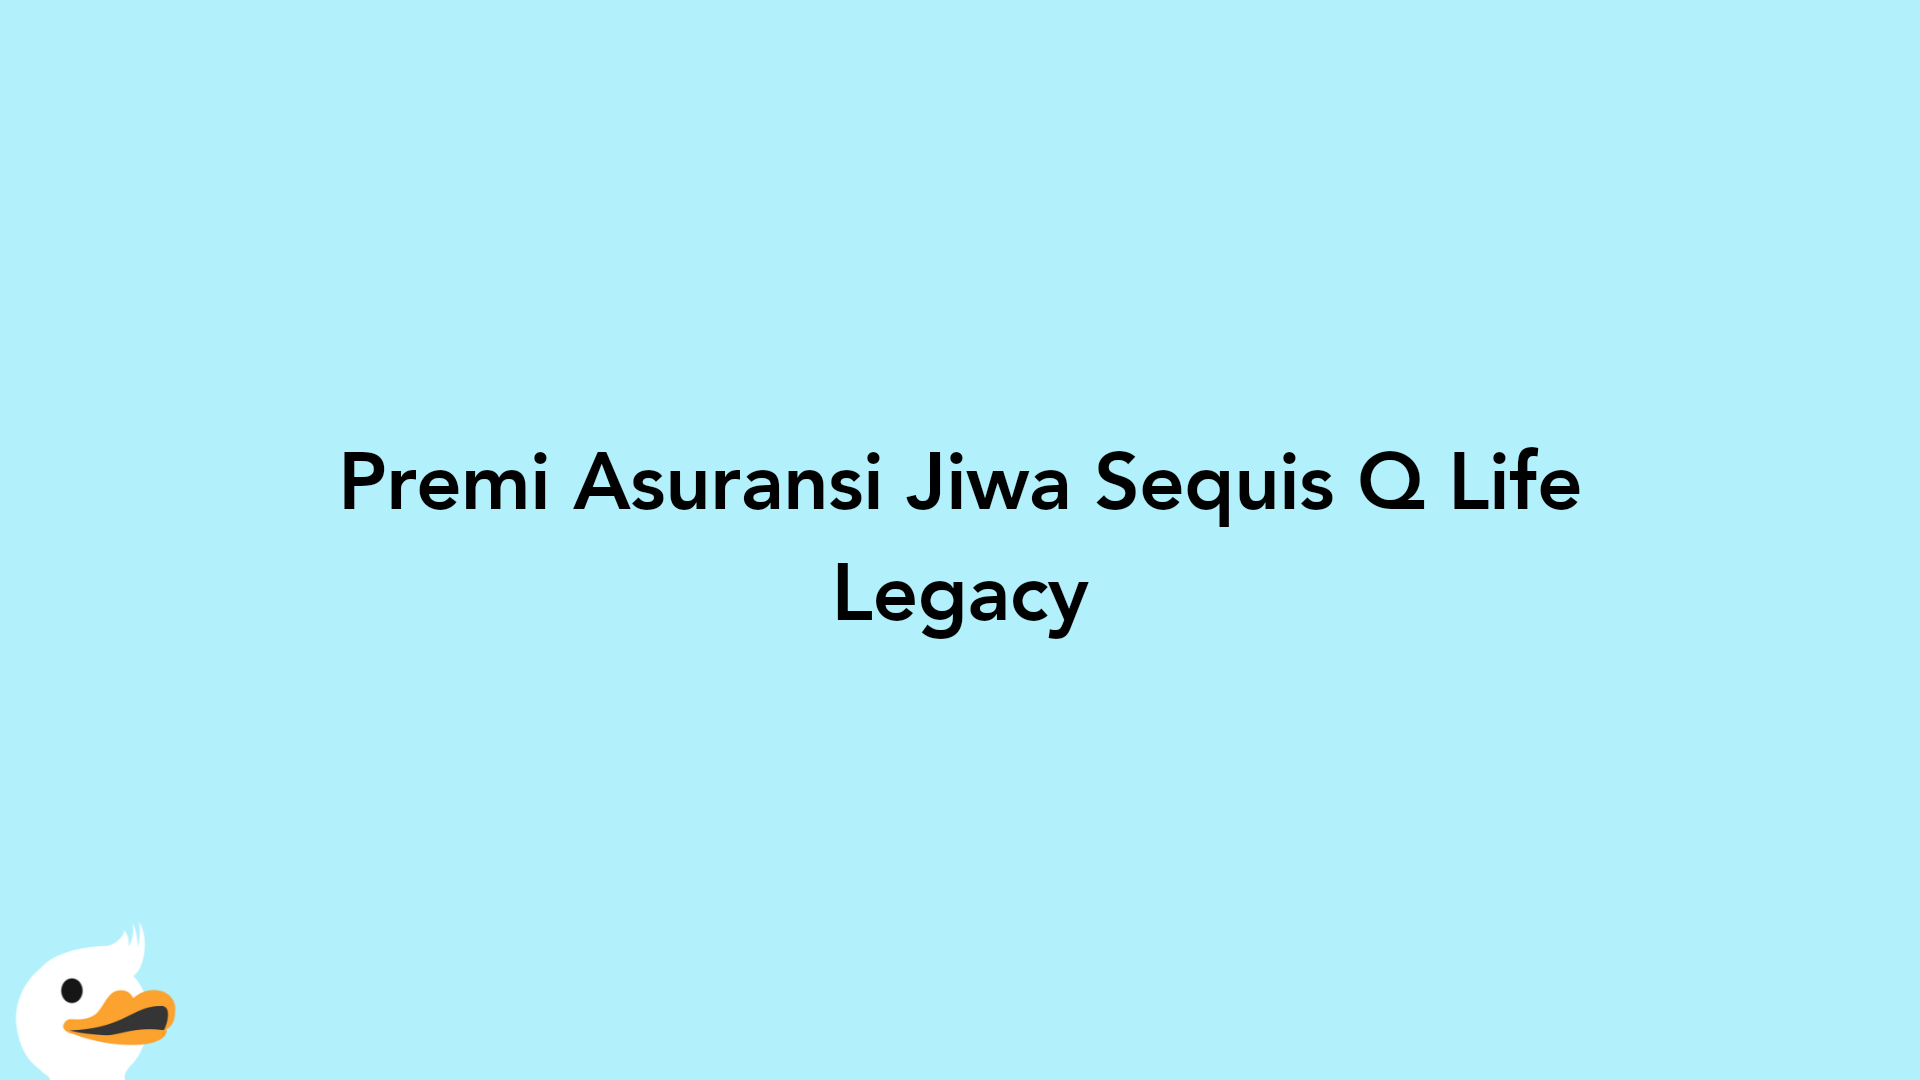 Premi Asuransi Jiwa Sequis Q Life Legacy